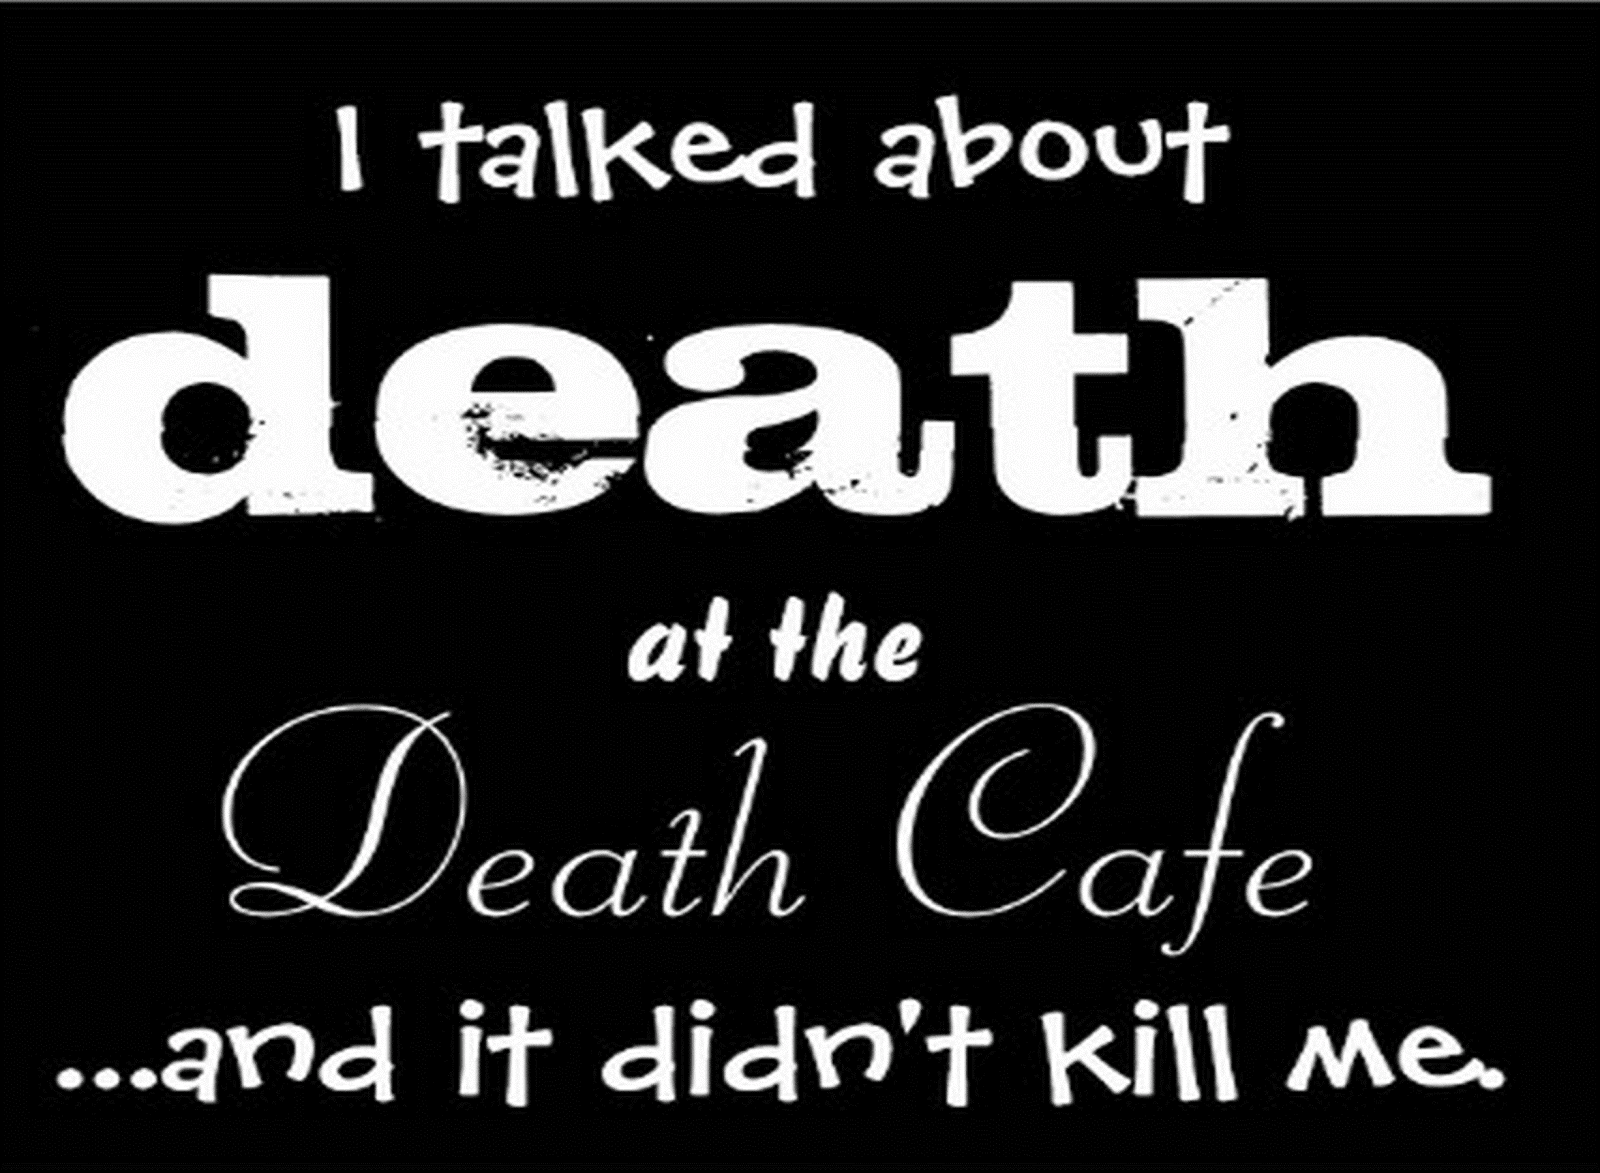 Death Cafe Cold Lake